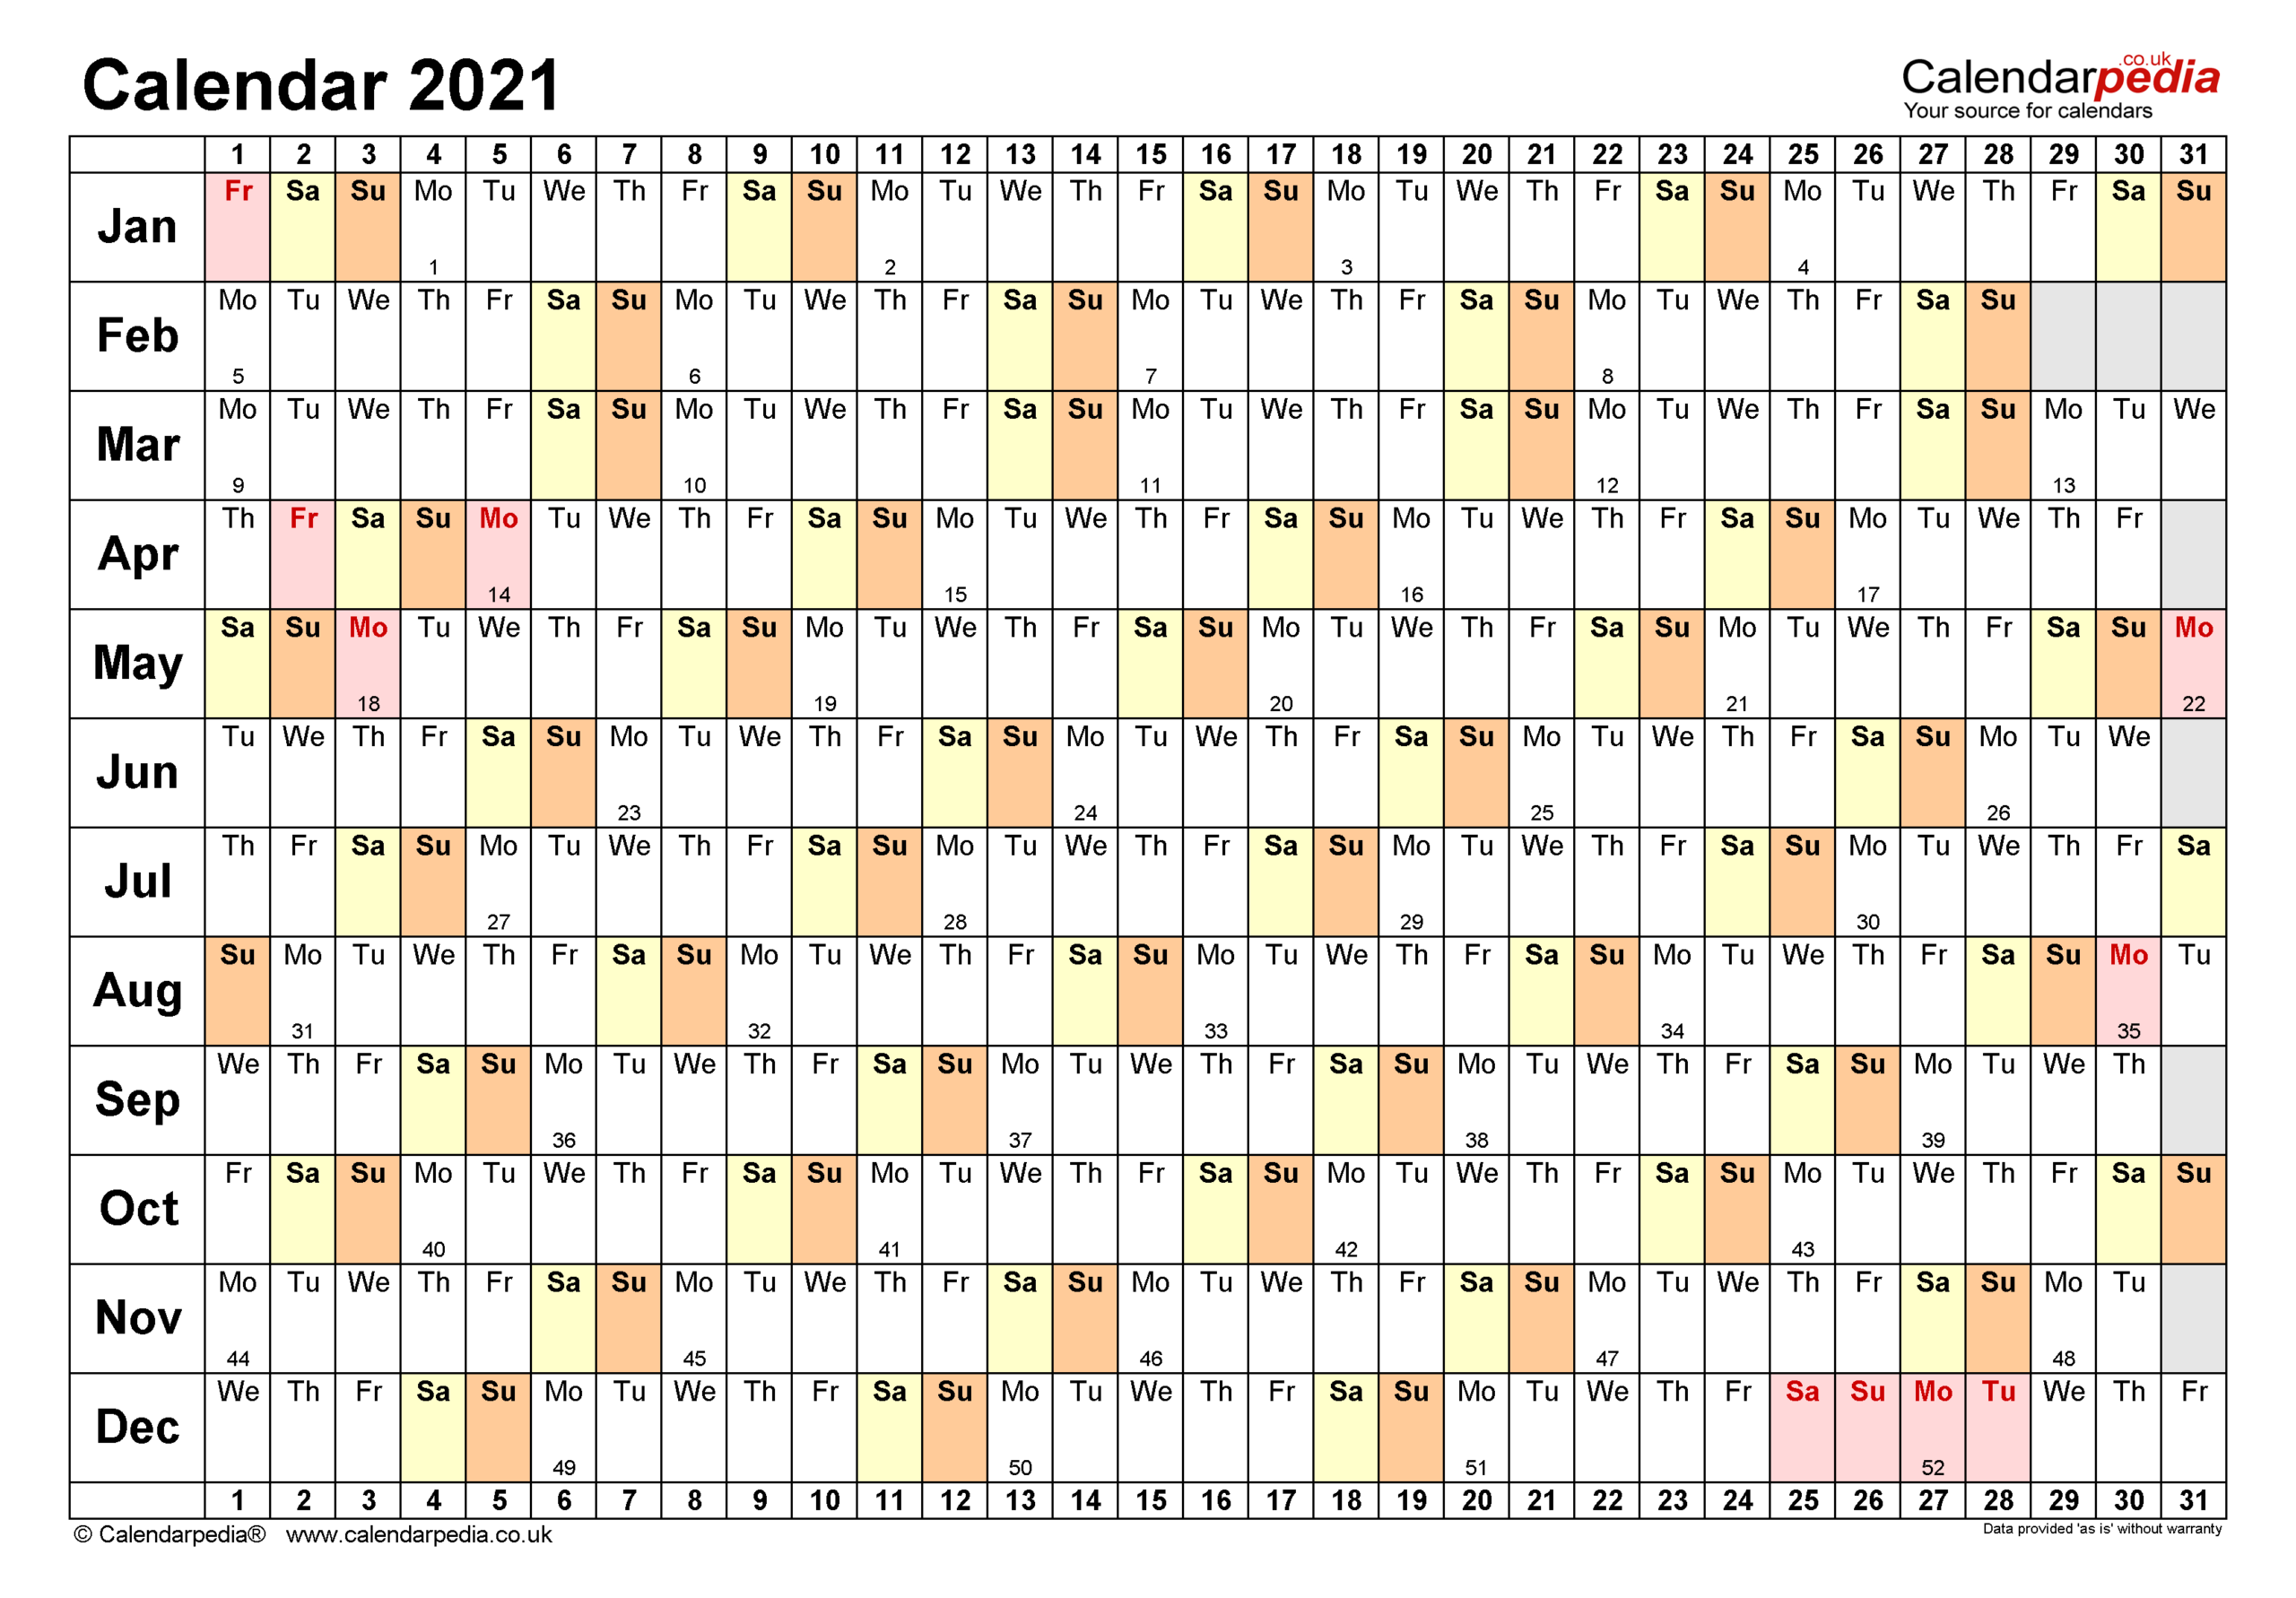 Calendar 2021 (Uk) - Free Printable Microsoft Excel Templates